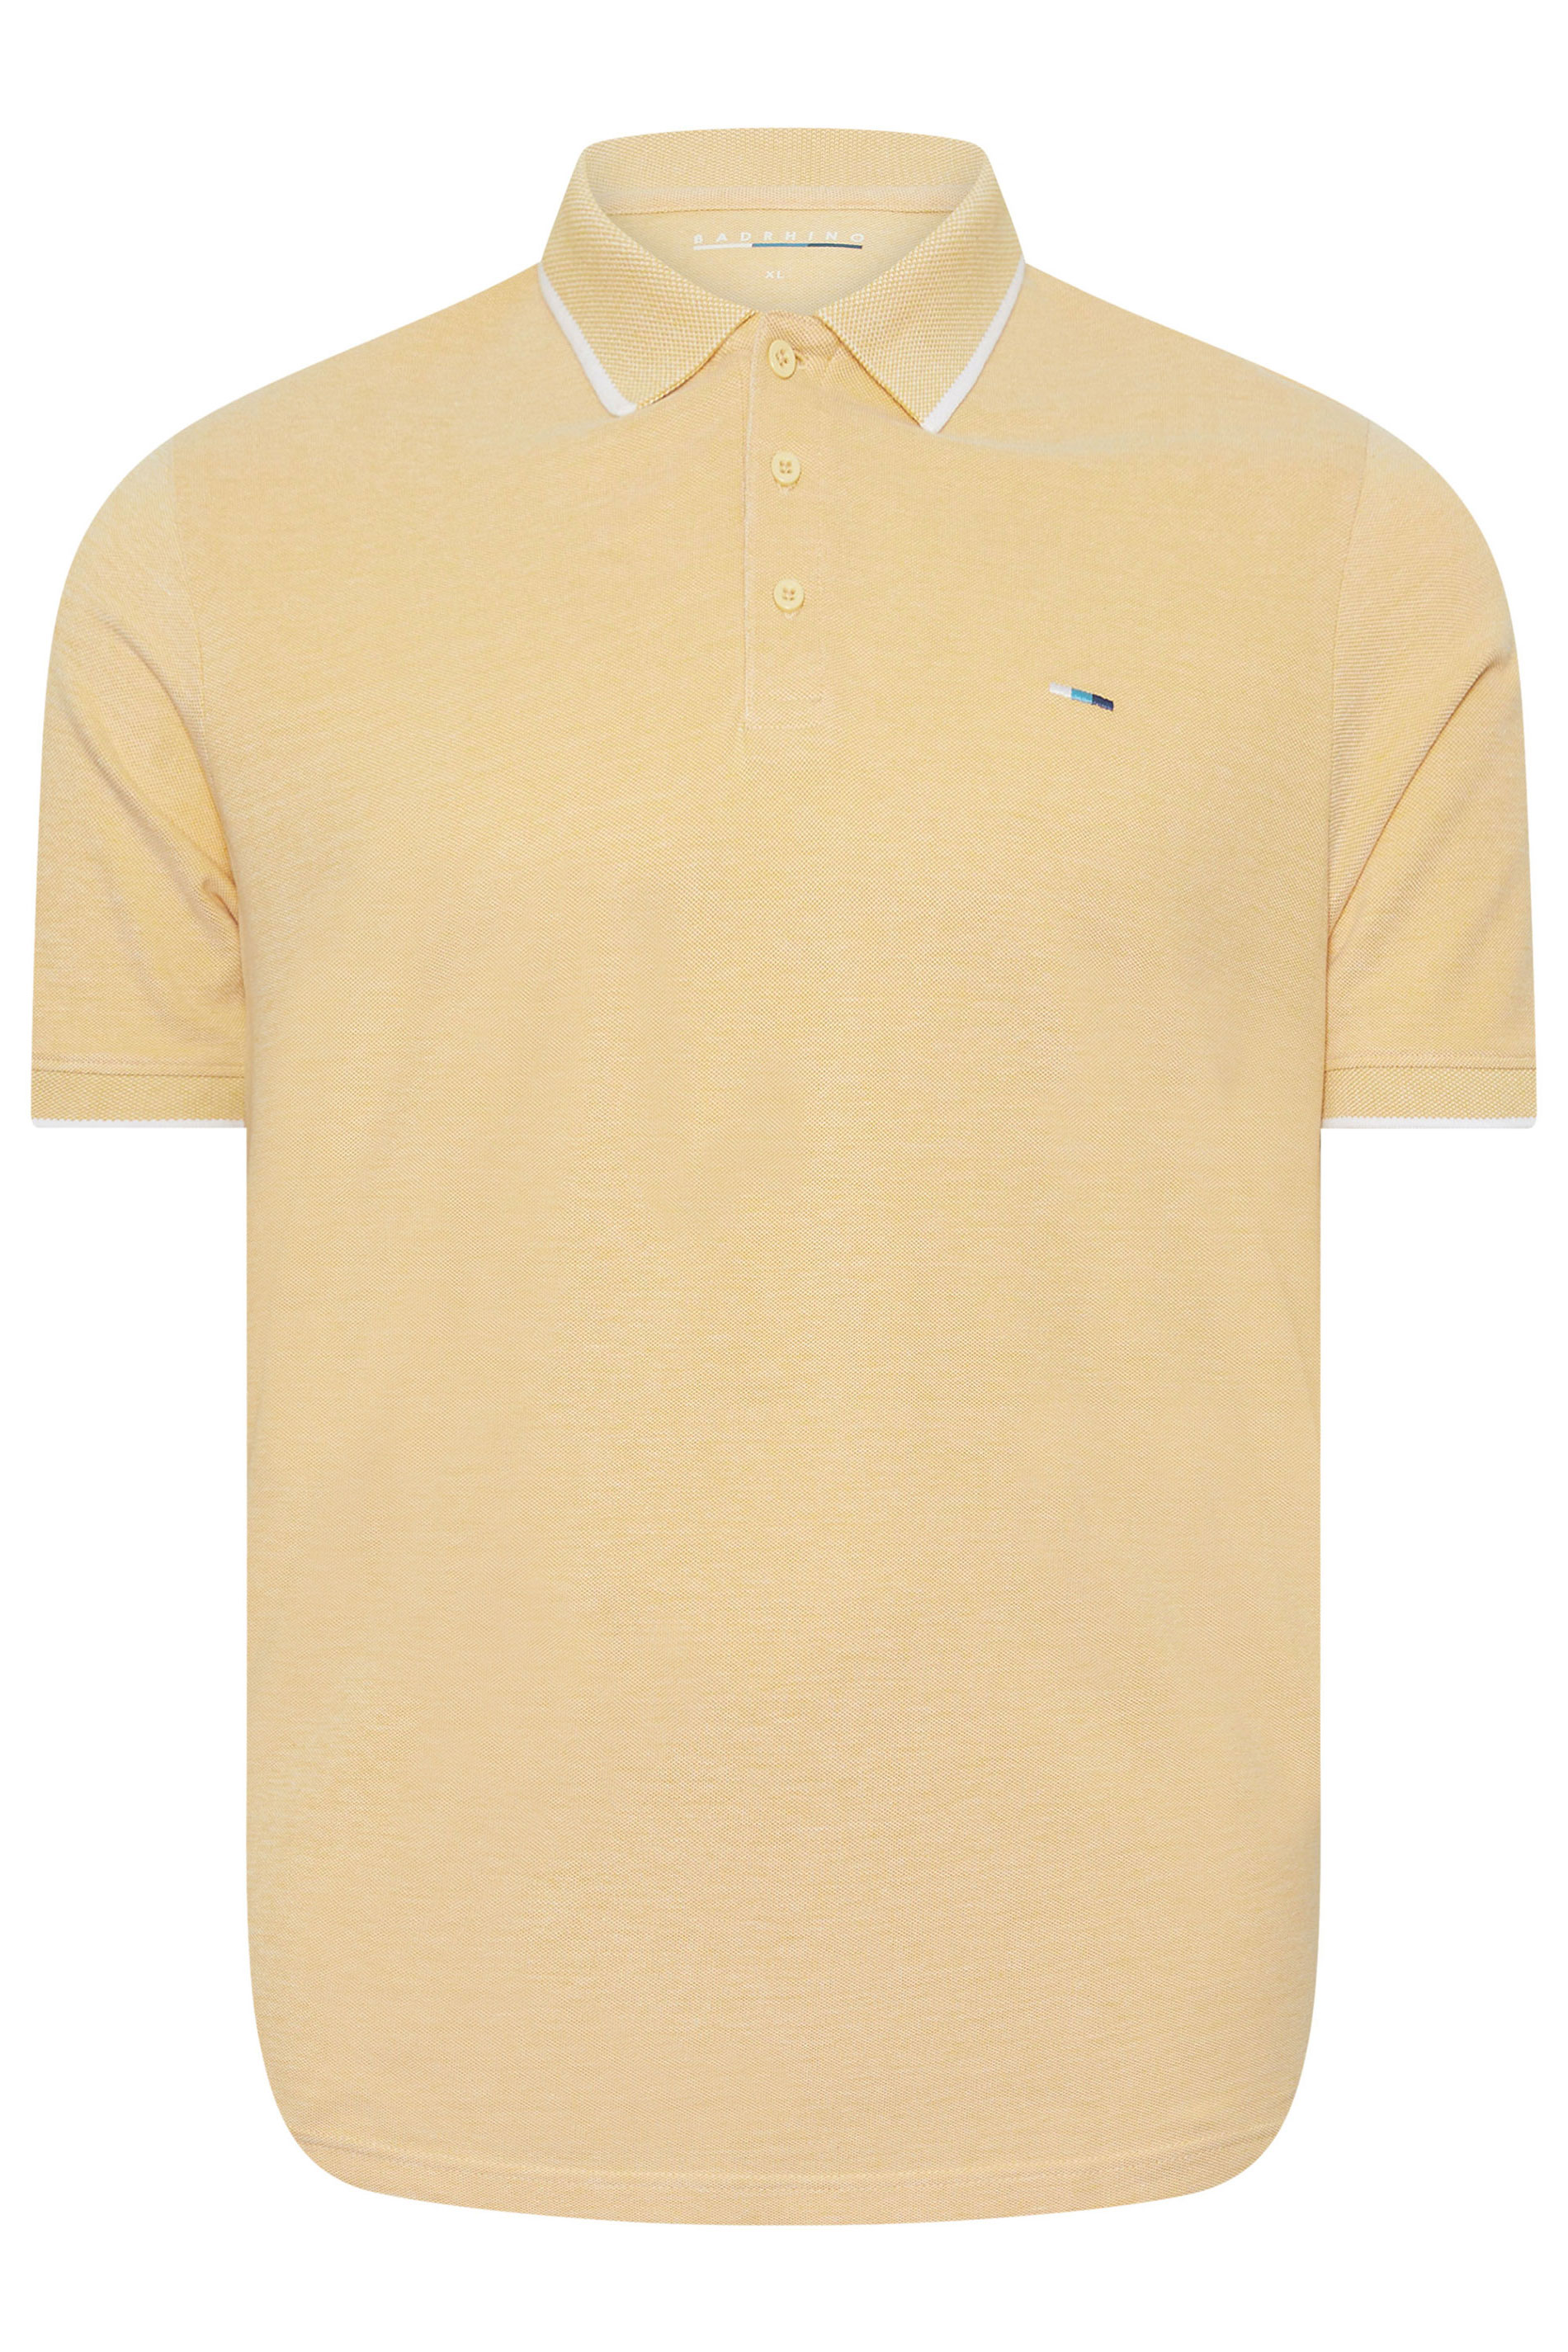 BadRhino Big & Tall Yellow Birdseye Tipped Polo Shirt | BadRhino 1